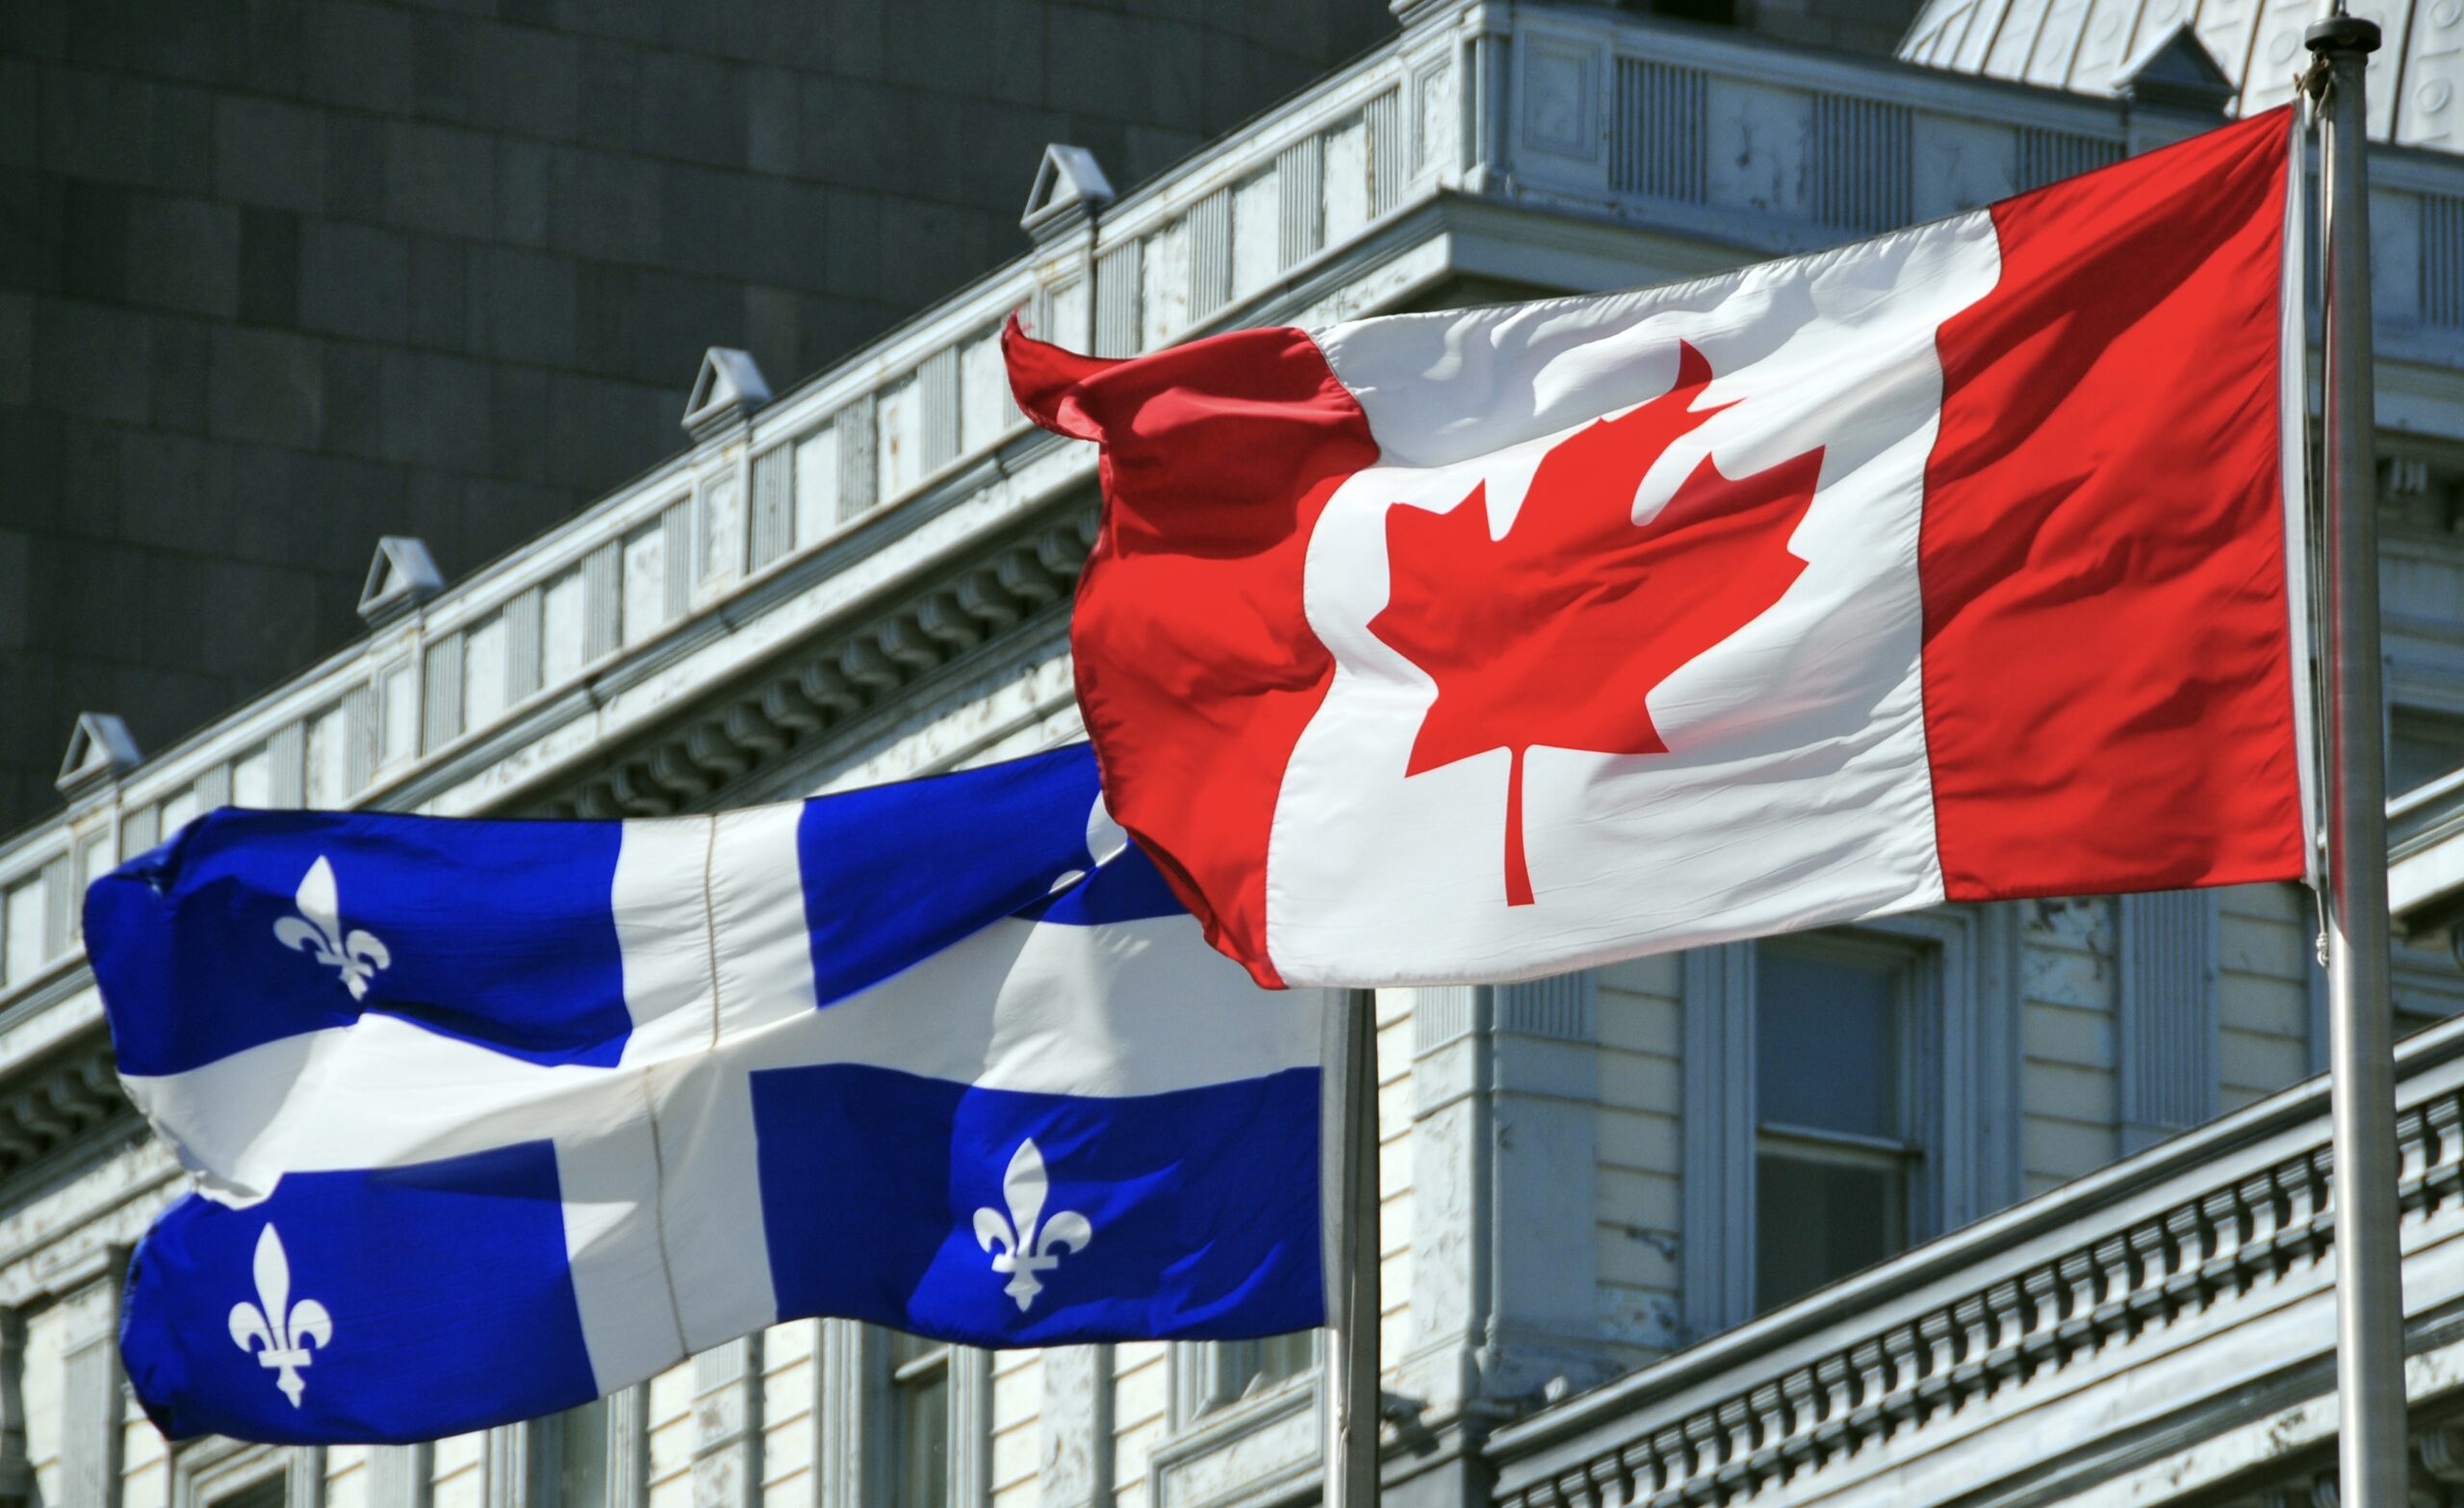 Quebec has more Canadian pride than Alberta and Saskatchewan